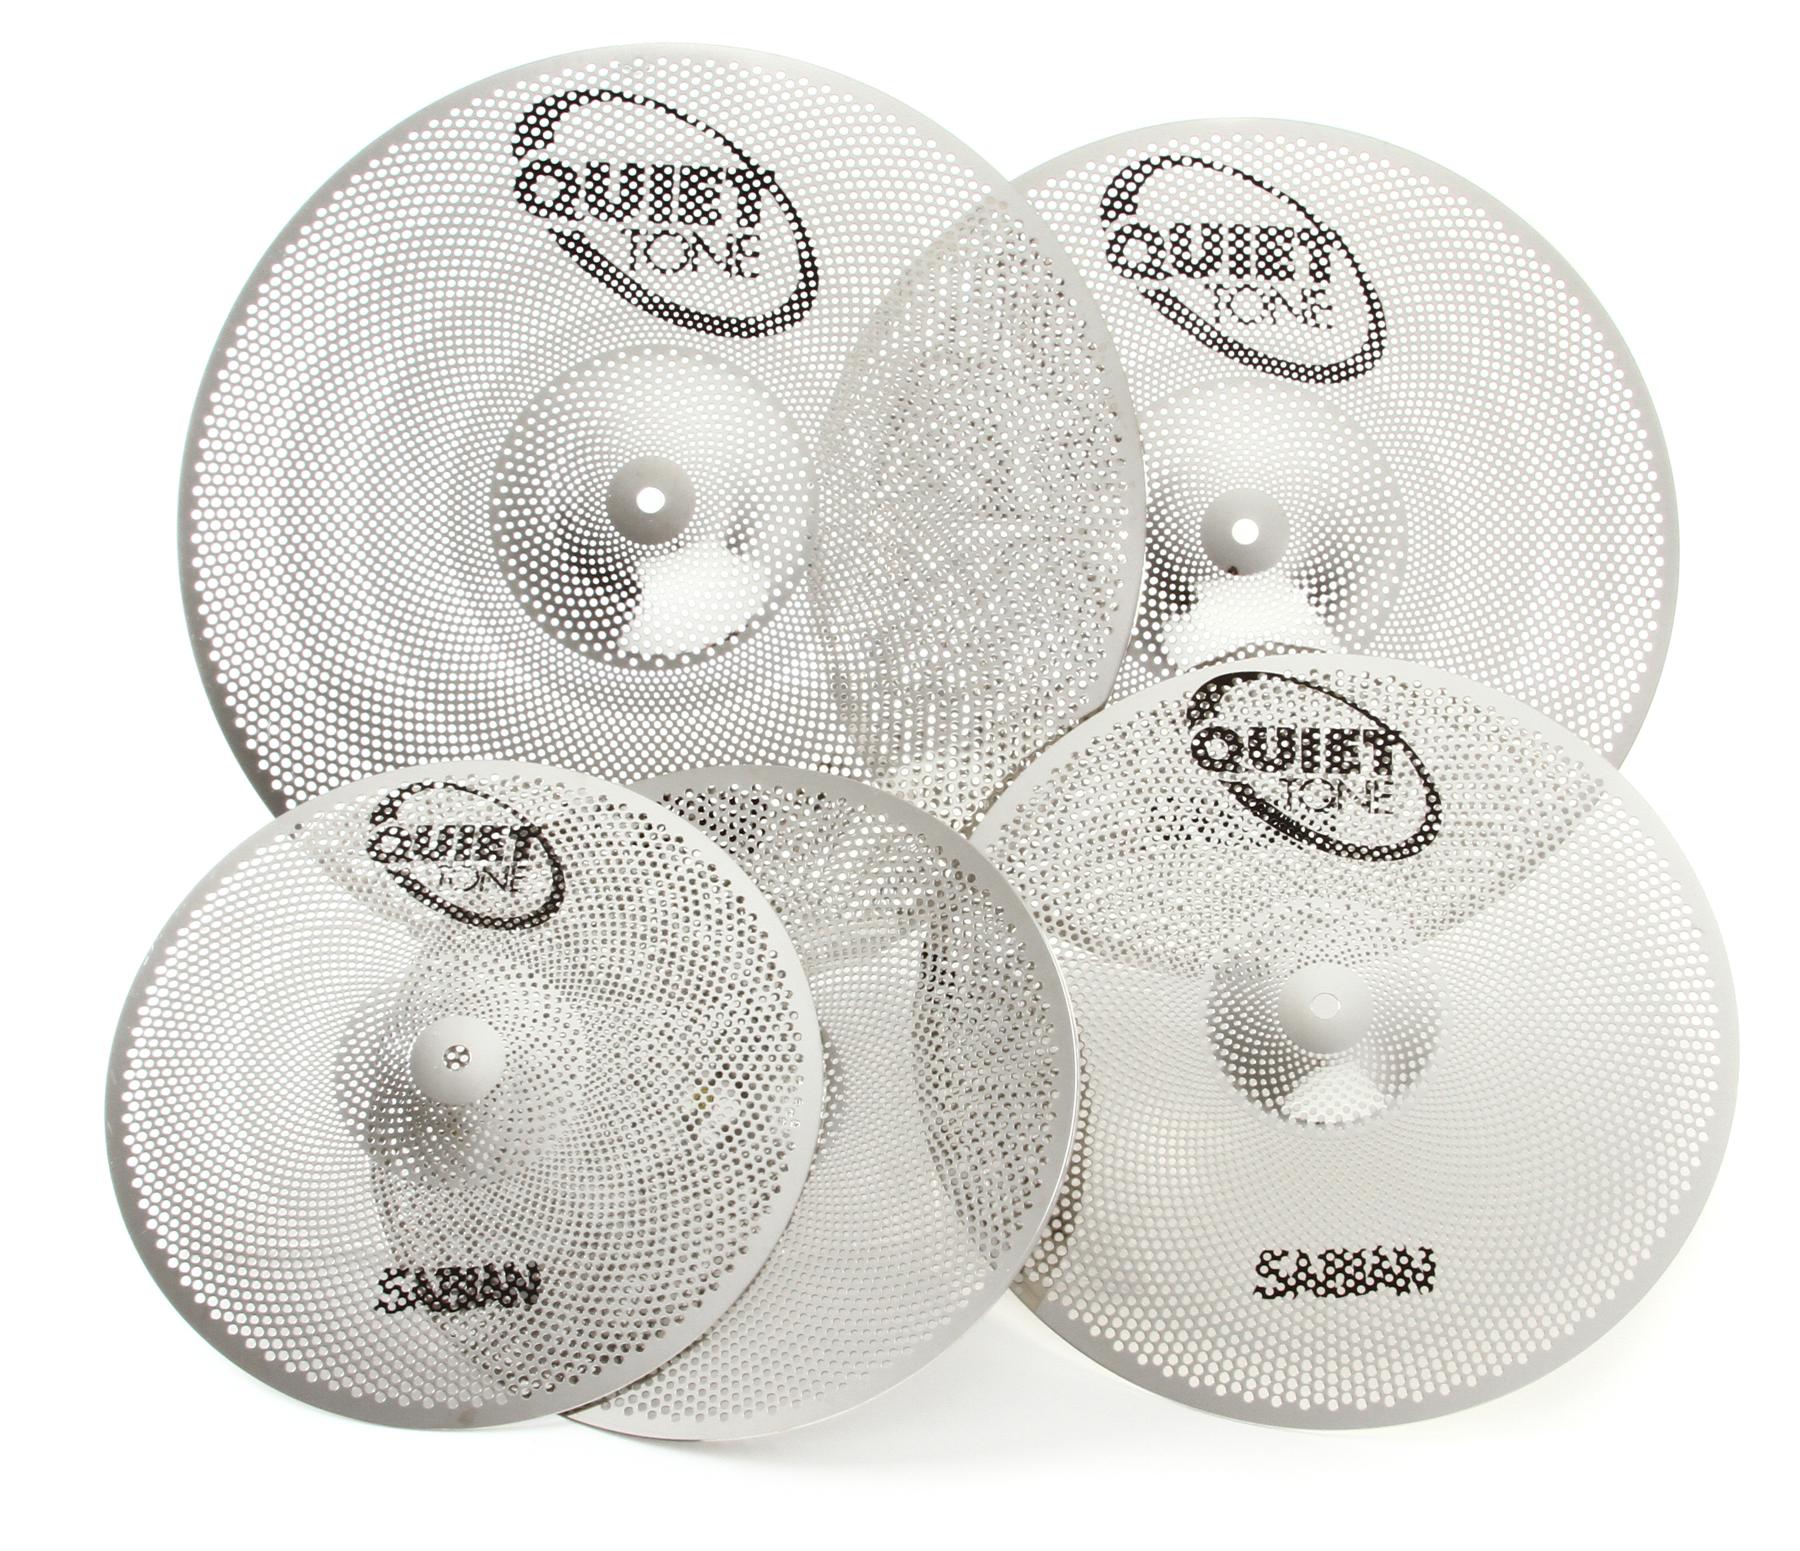 3. Sabian Quiet Tone Practice Cymbals Box Set